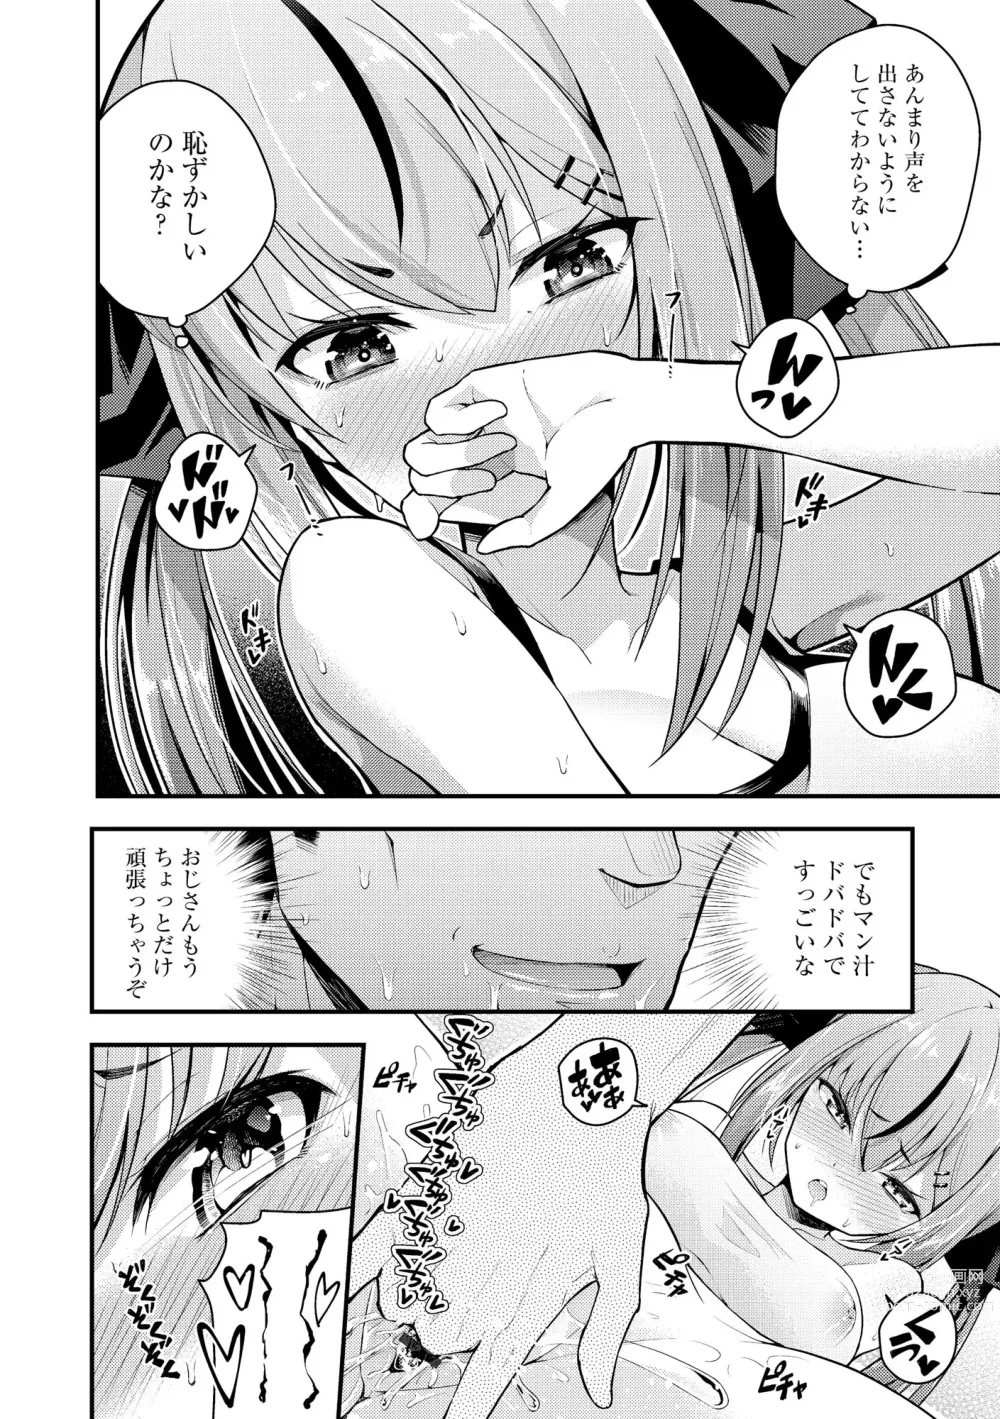 Page 20 of manga Cyberia Plus Vol. 16